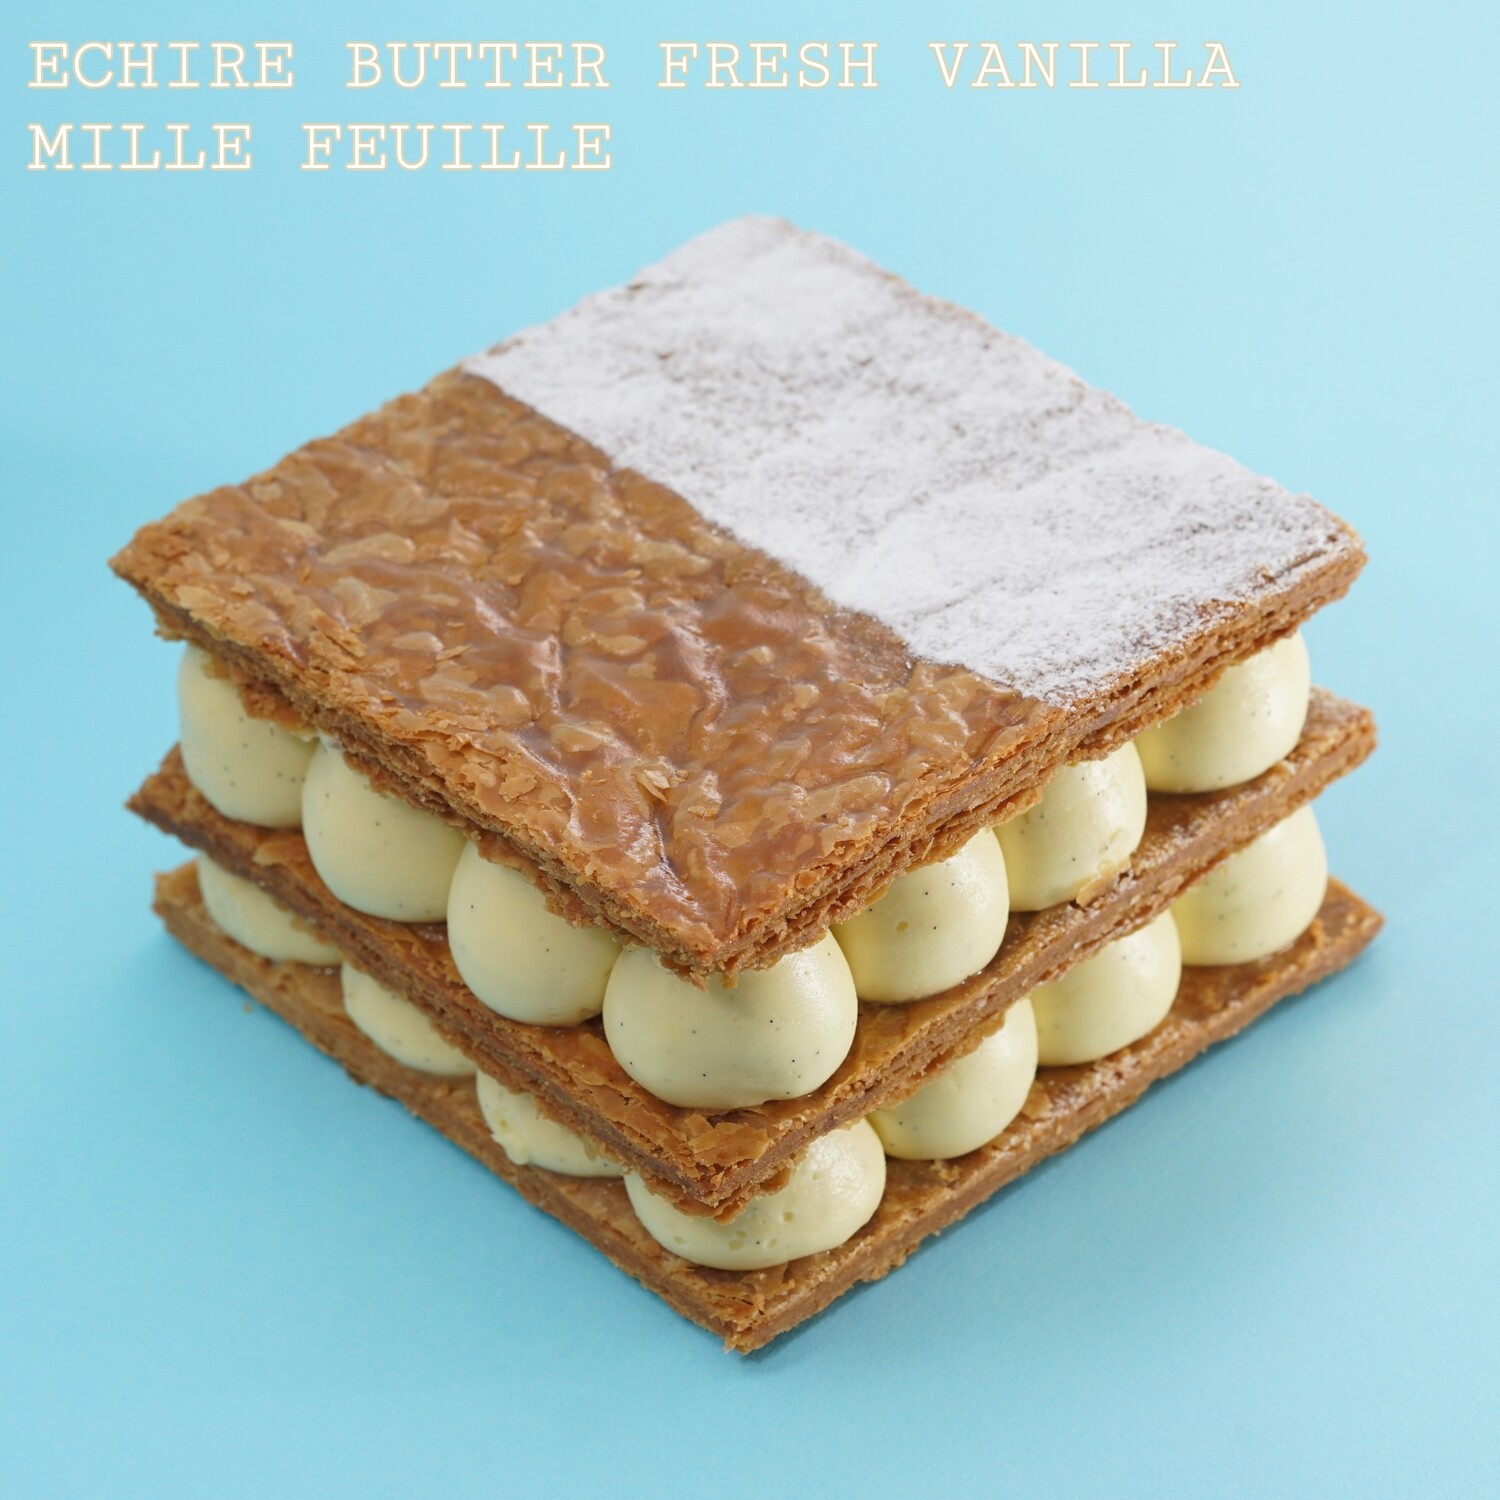 Echire 牛油鮮雲呢拿拿破崙/Echire Butter Fresh Vanilla Mille Feuille